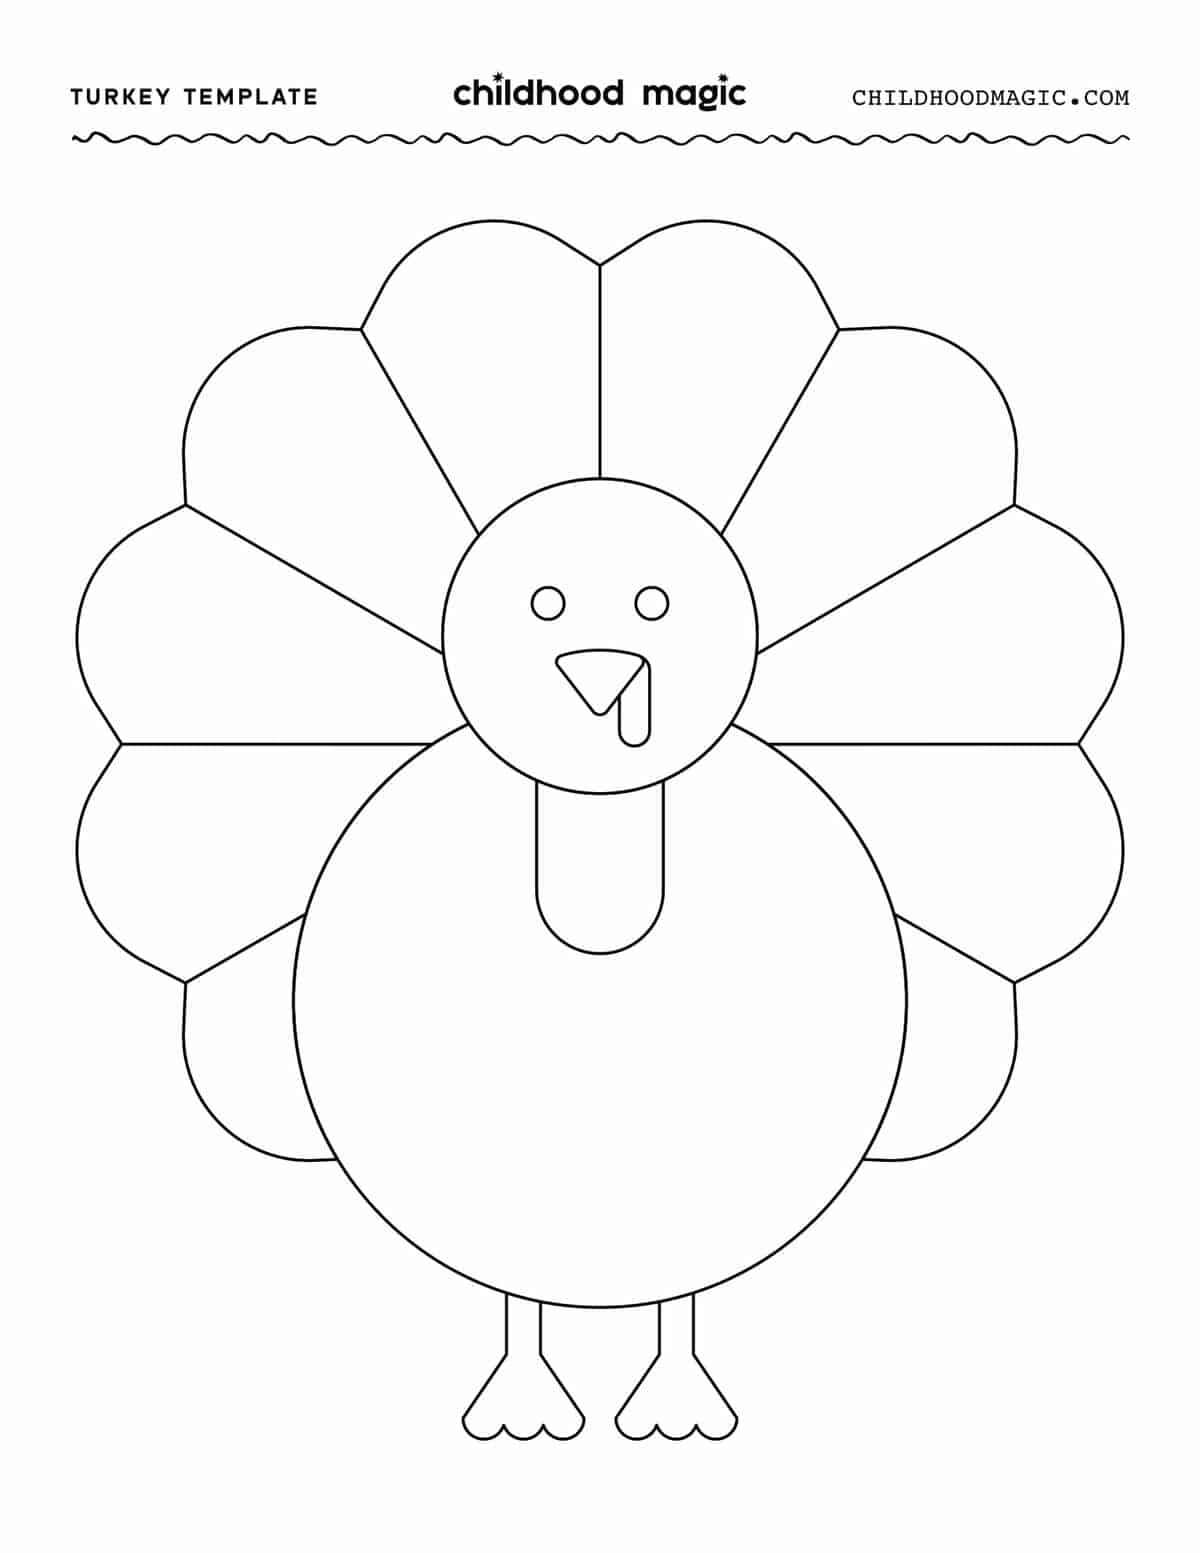 turkey-template-childhood-magic